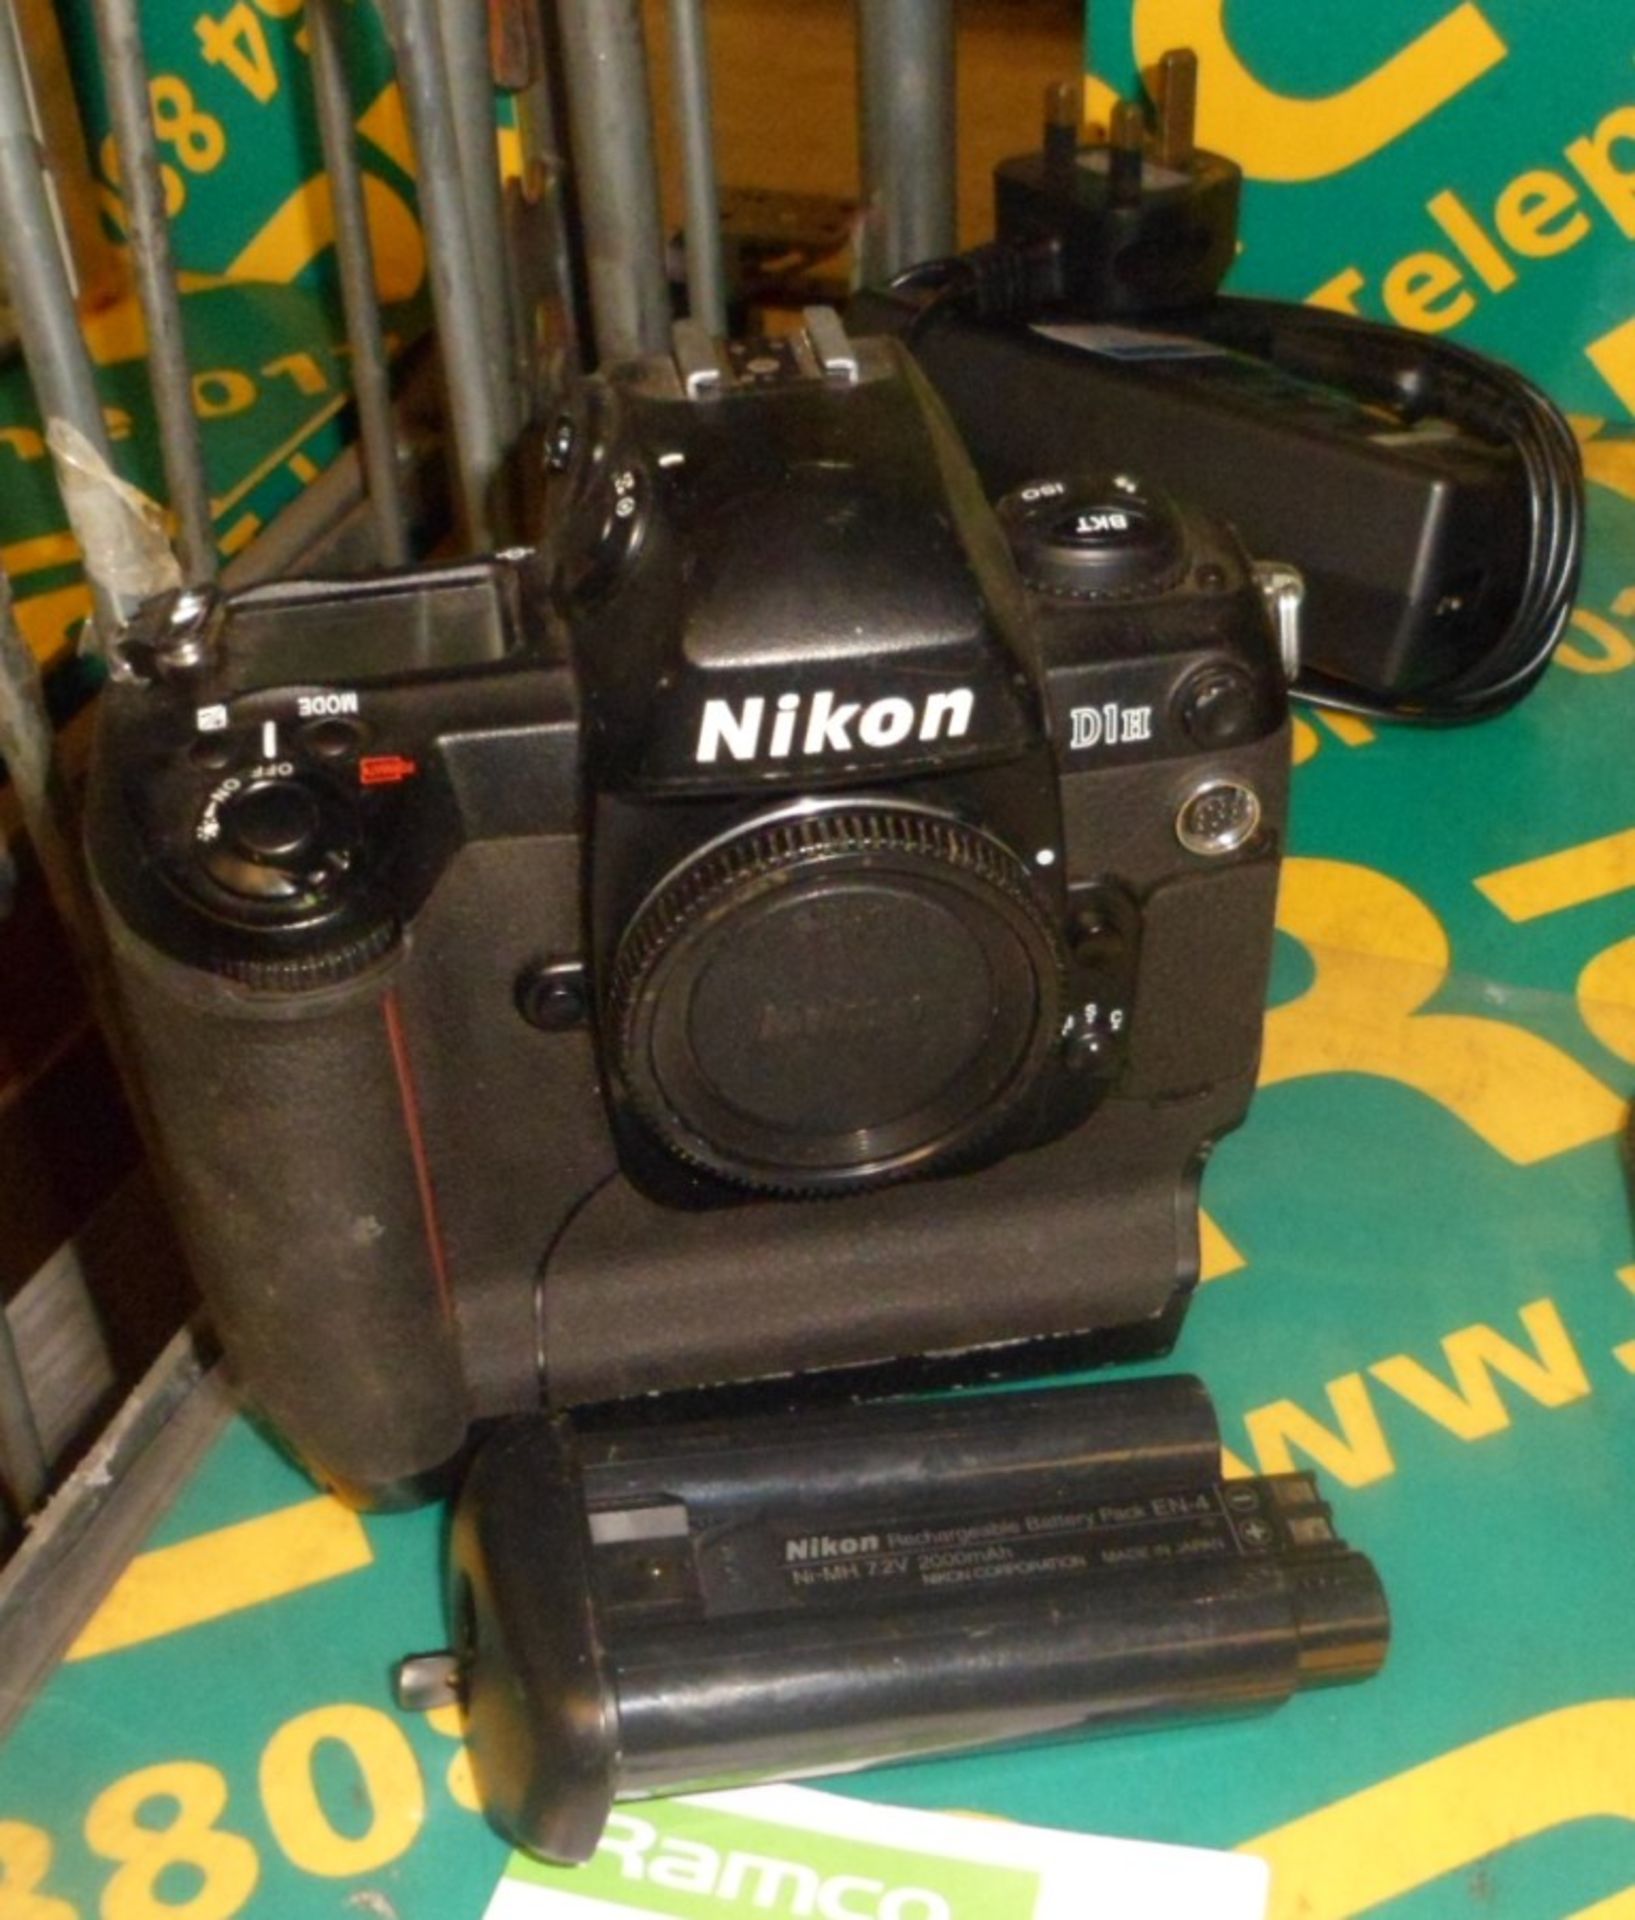 Nikon D1H Camera body, MH-16 Quick Charger, EN-4 rechargable battery pack